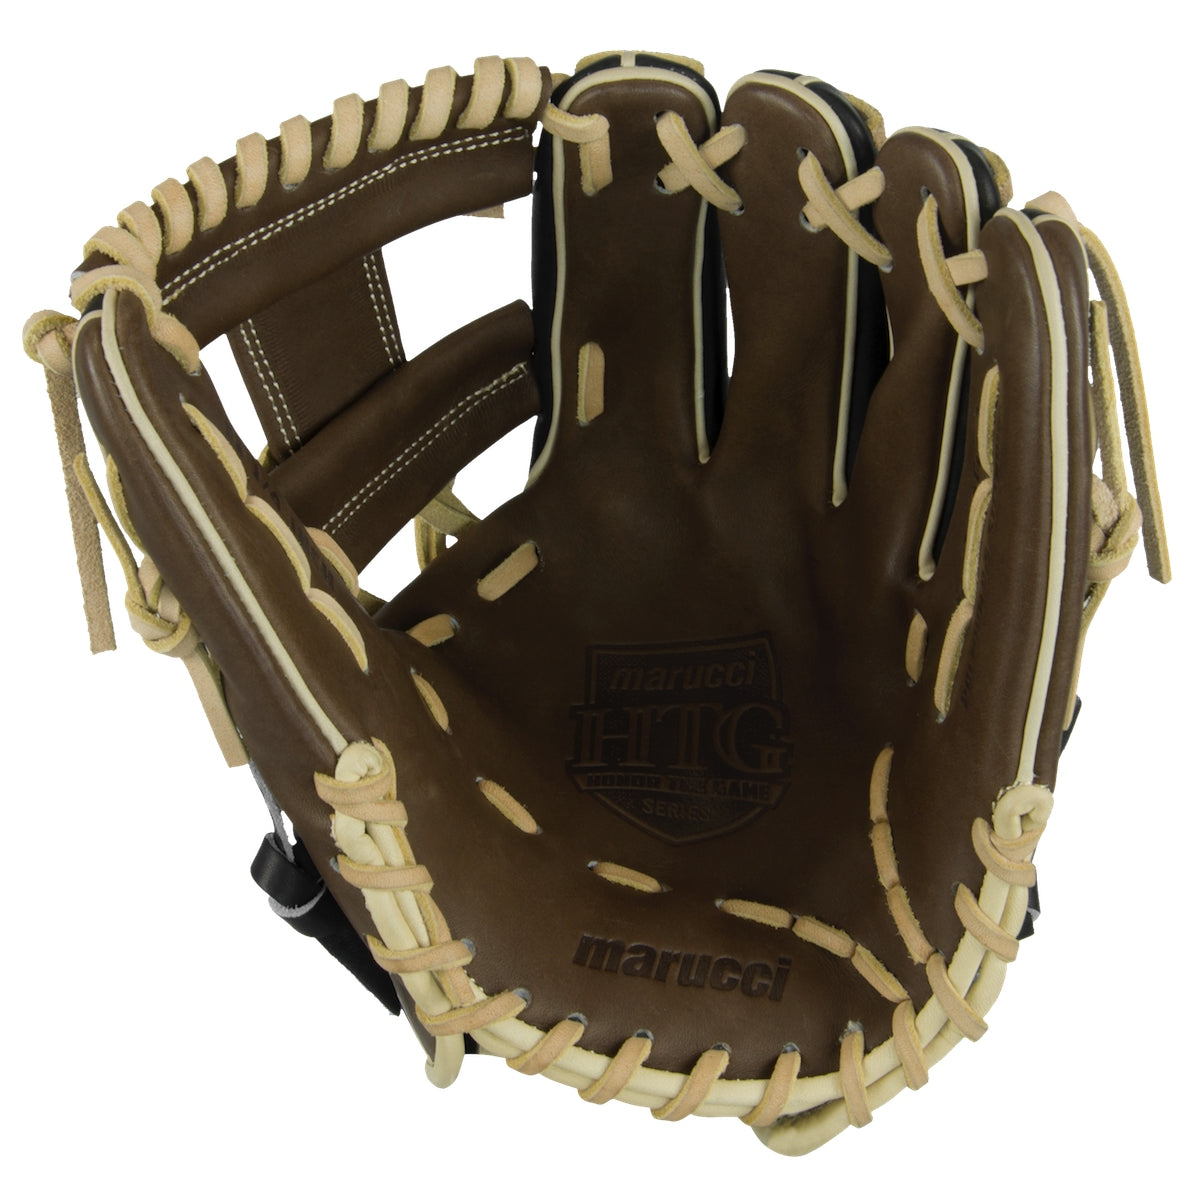 Marucci HTG Series MFGHG1125I 11.25 inch Infield Baseball Glove